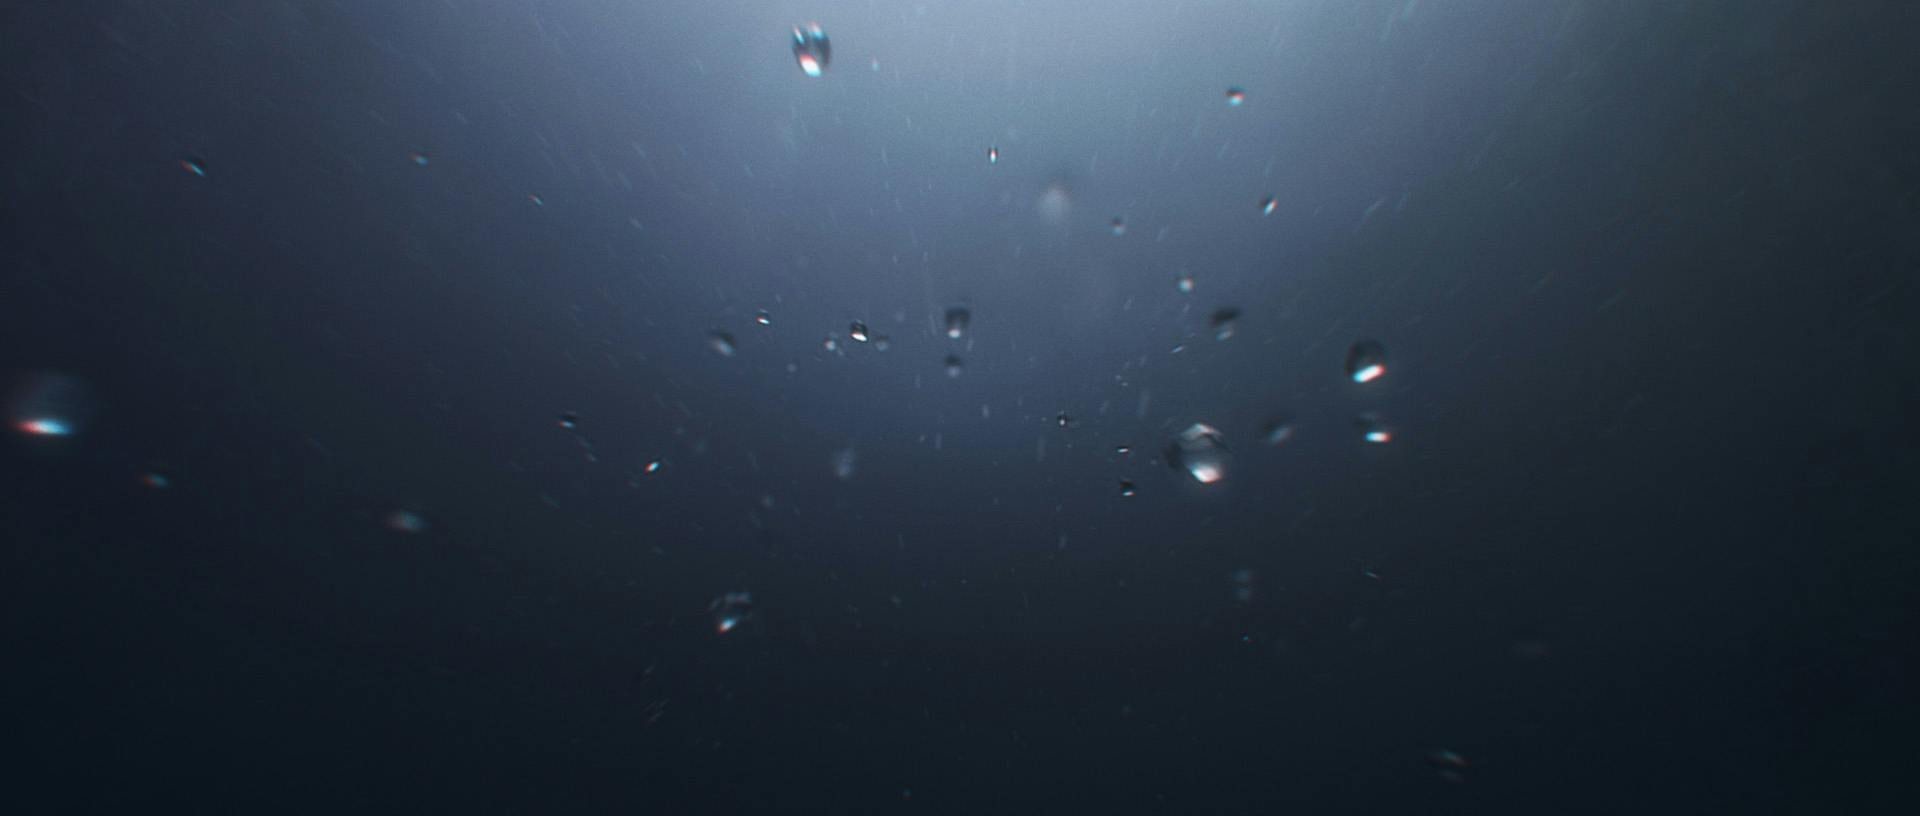 Bubbles underwater in a dark ocean.